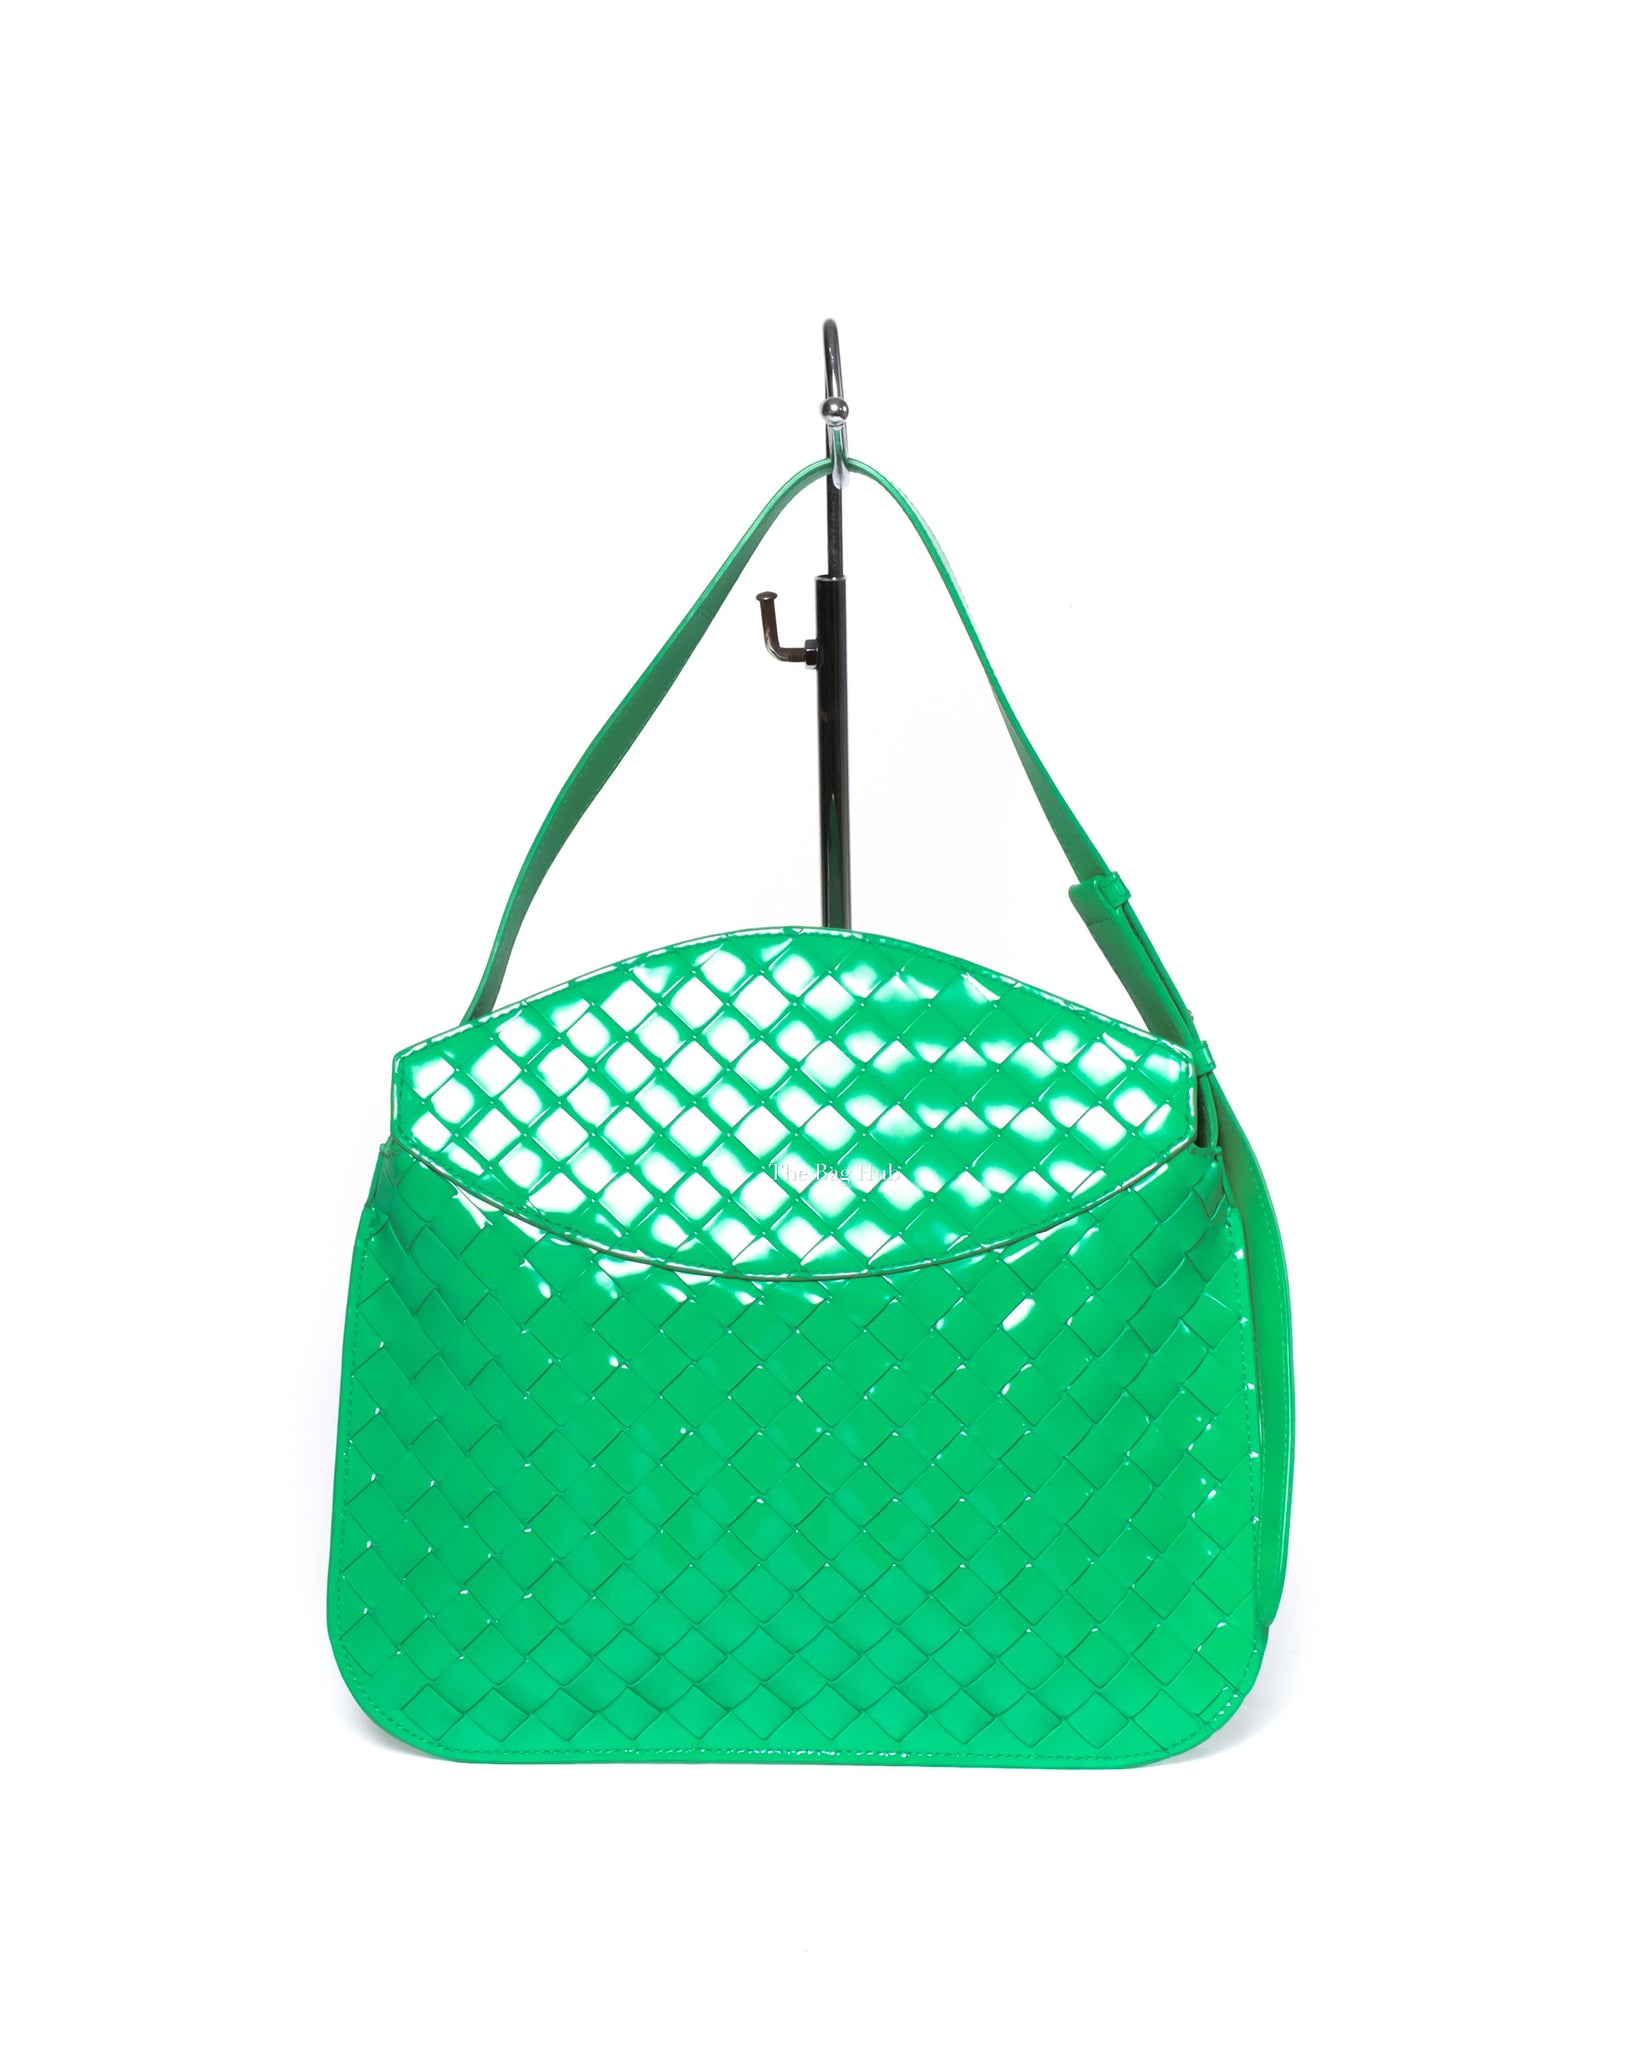 Bottega Veneta Grass Green Patent Leather Intrecciato Small Flap Shoulder Bag-3